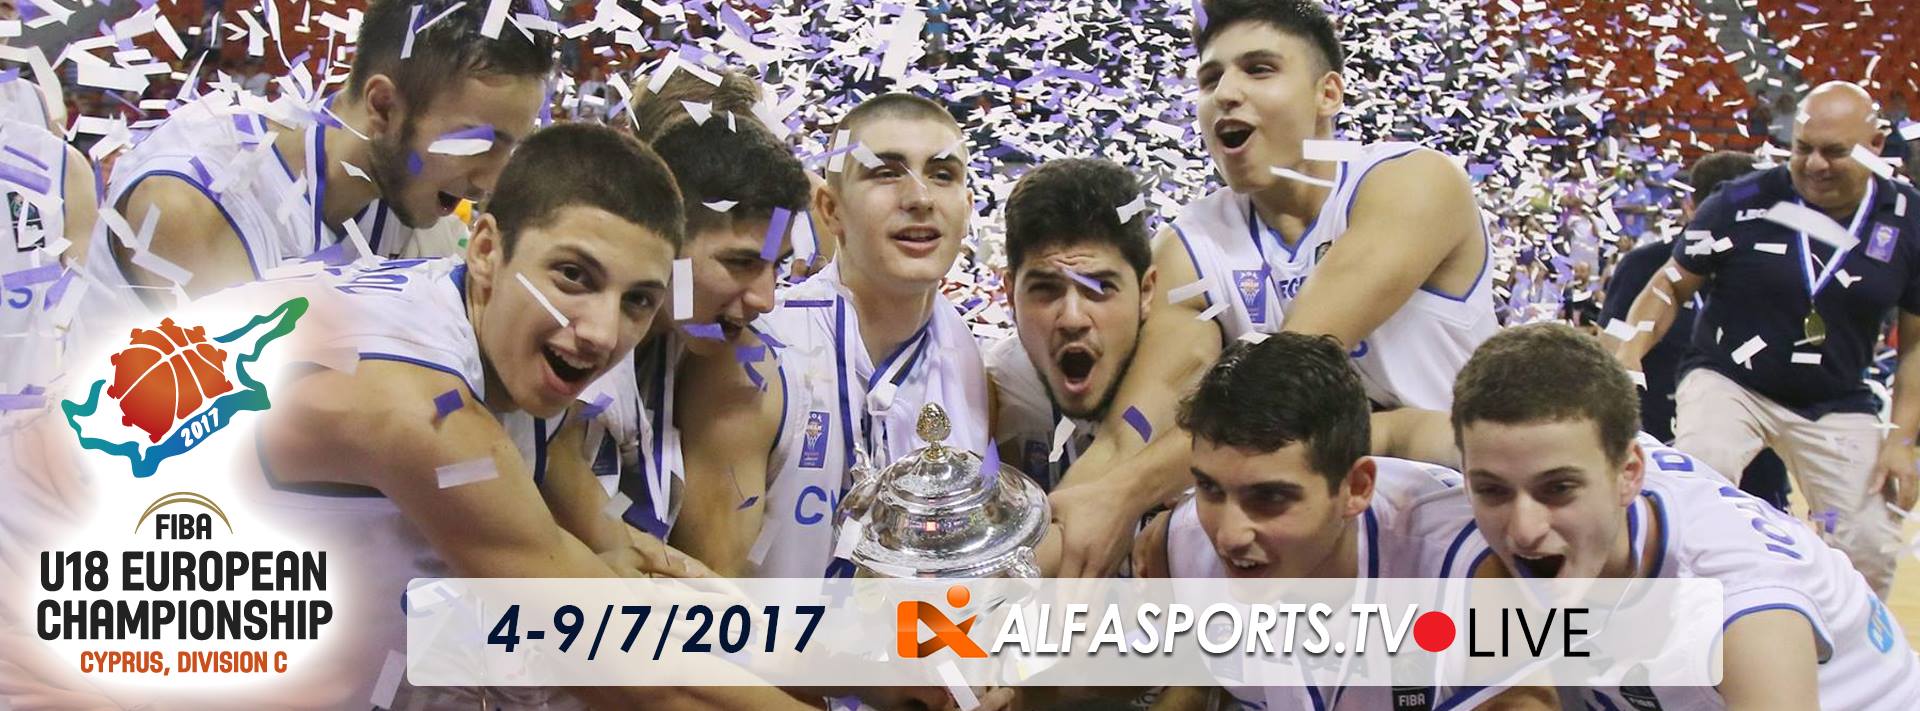 FIBA U18 EUROPEAN CHAMPIONSHIP – CYPRUS, DIVISION C